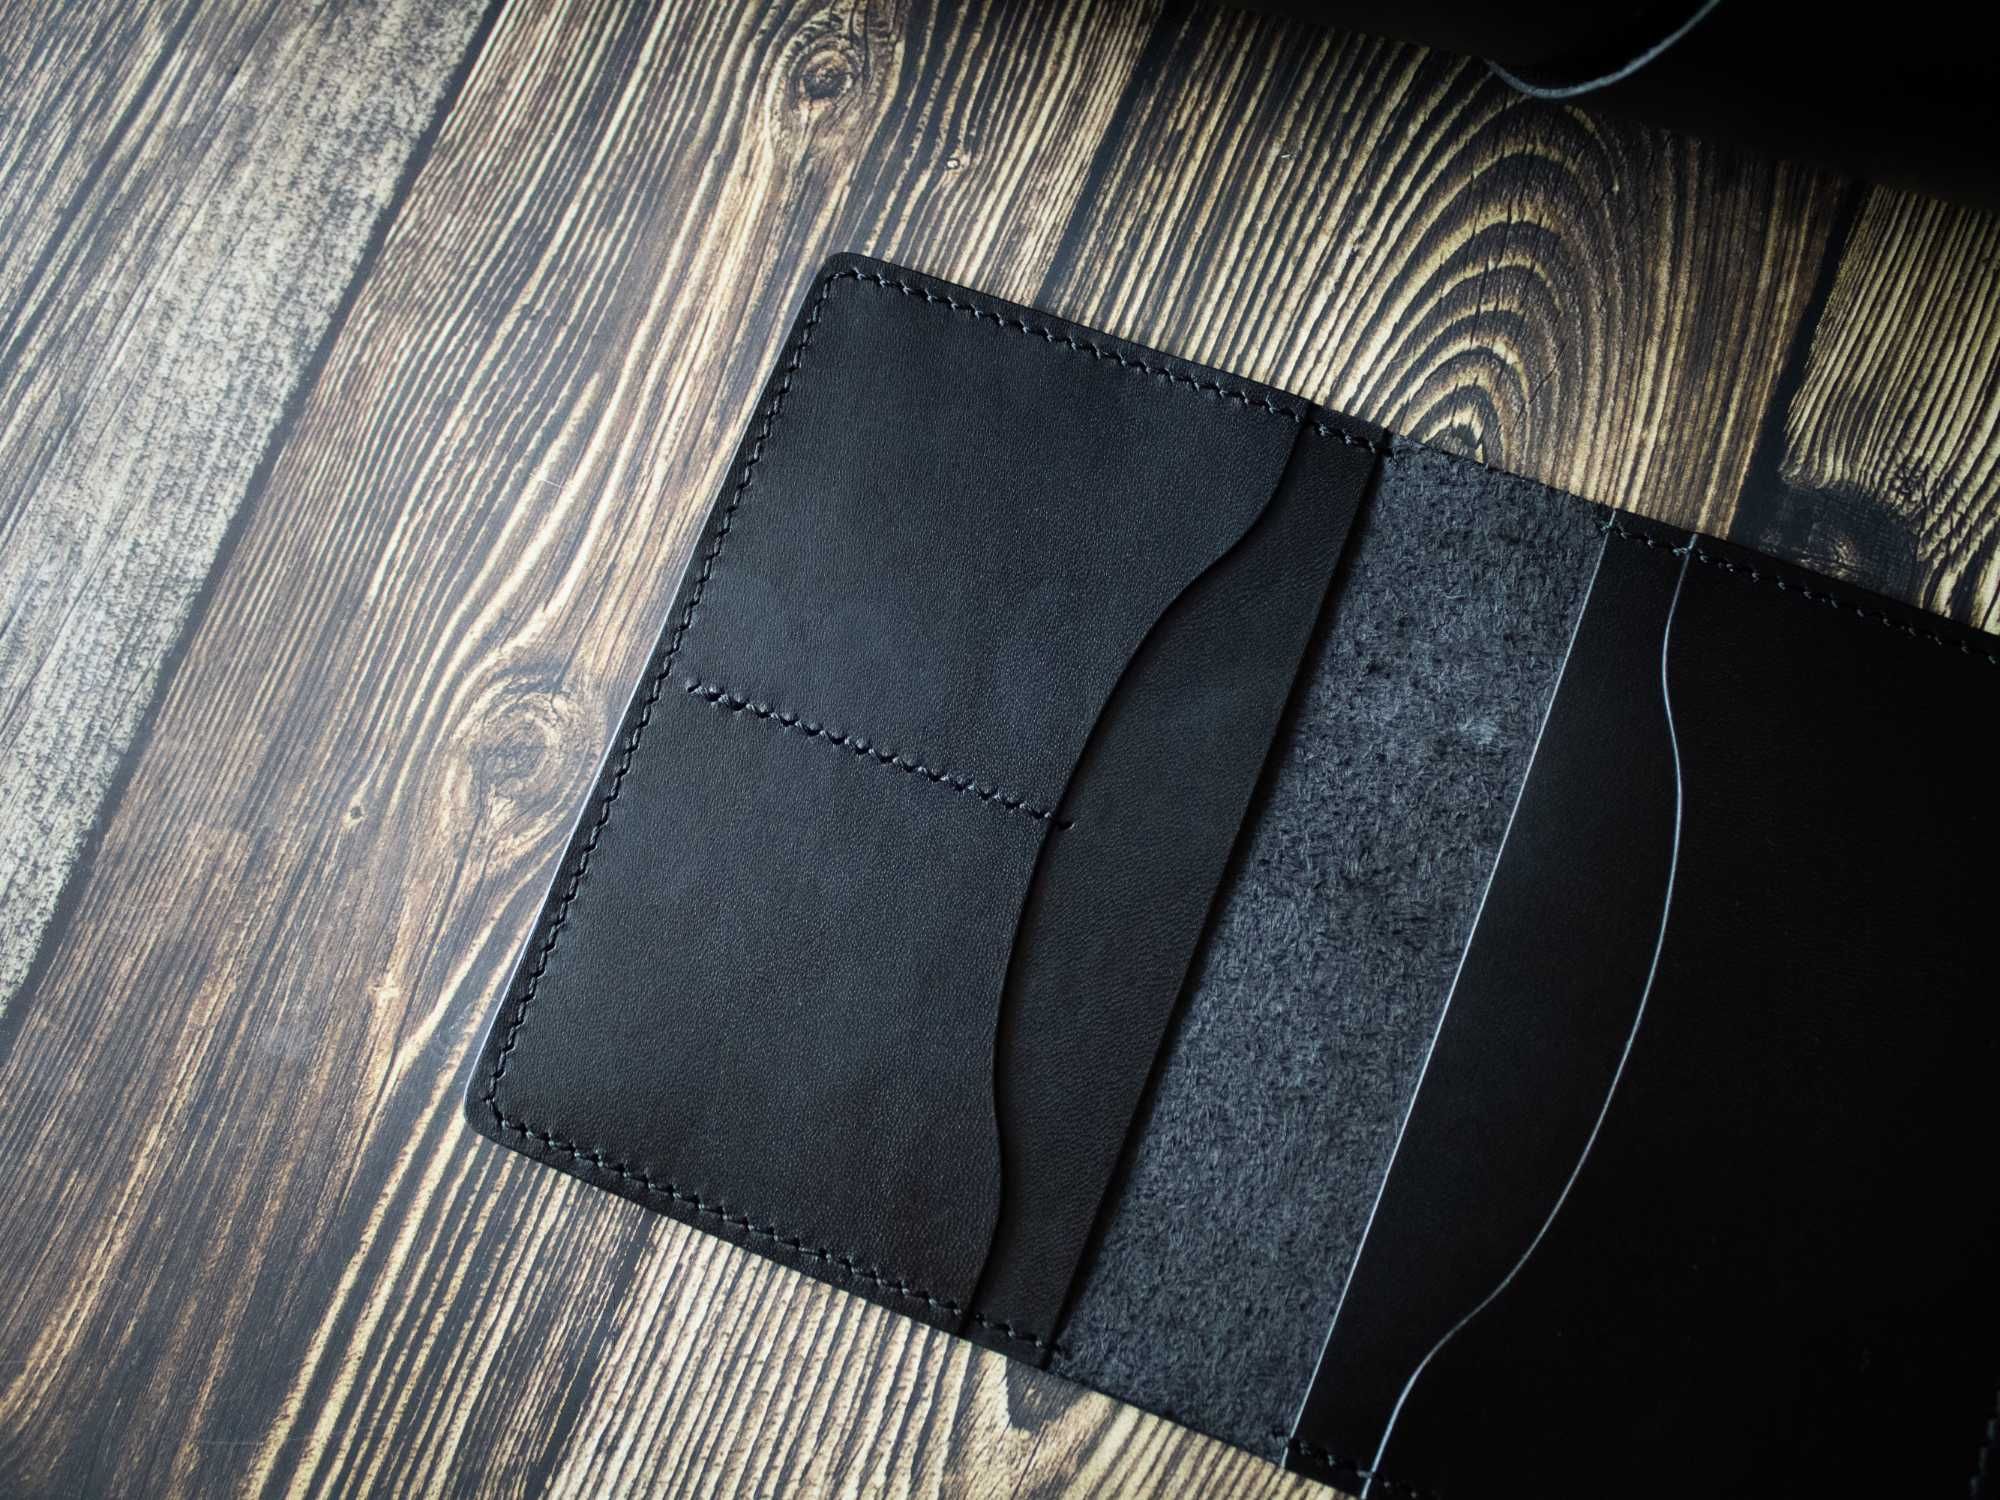 Etui na documenty z czarnej skóry licowej, czarny skórzany portfel